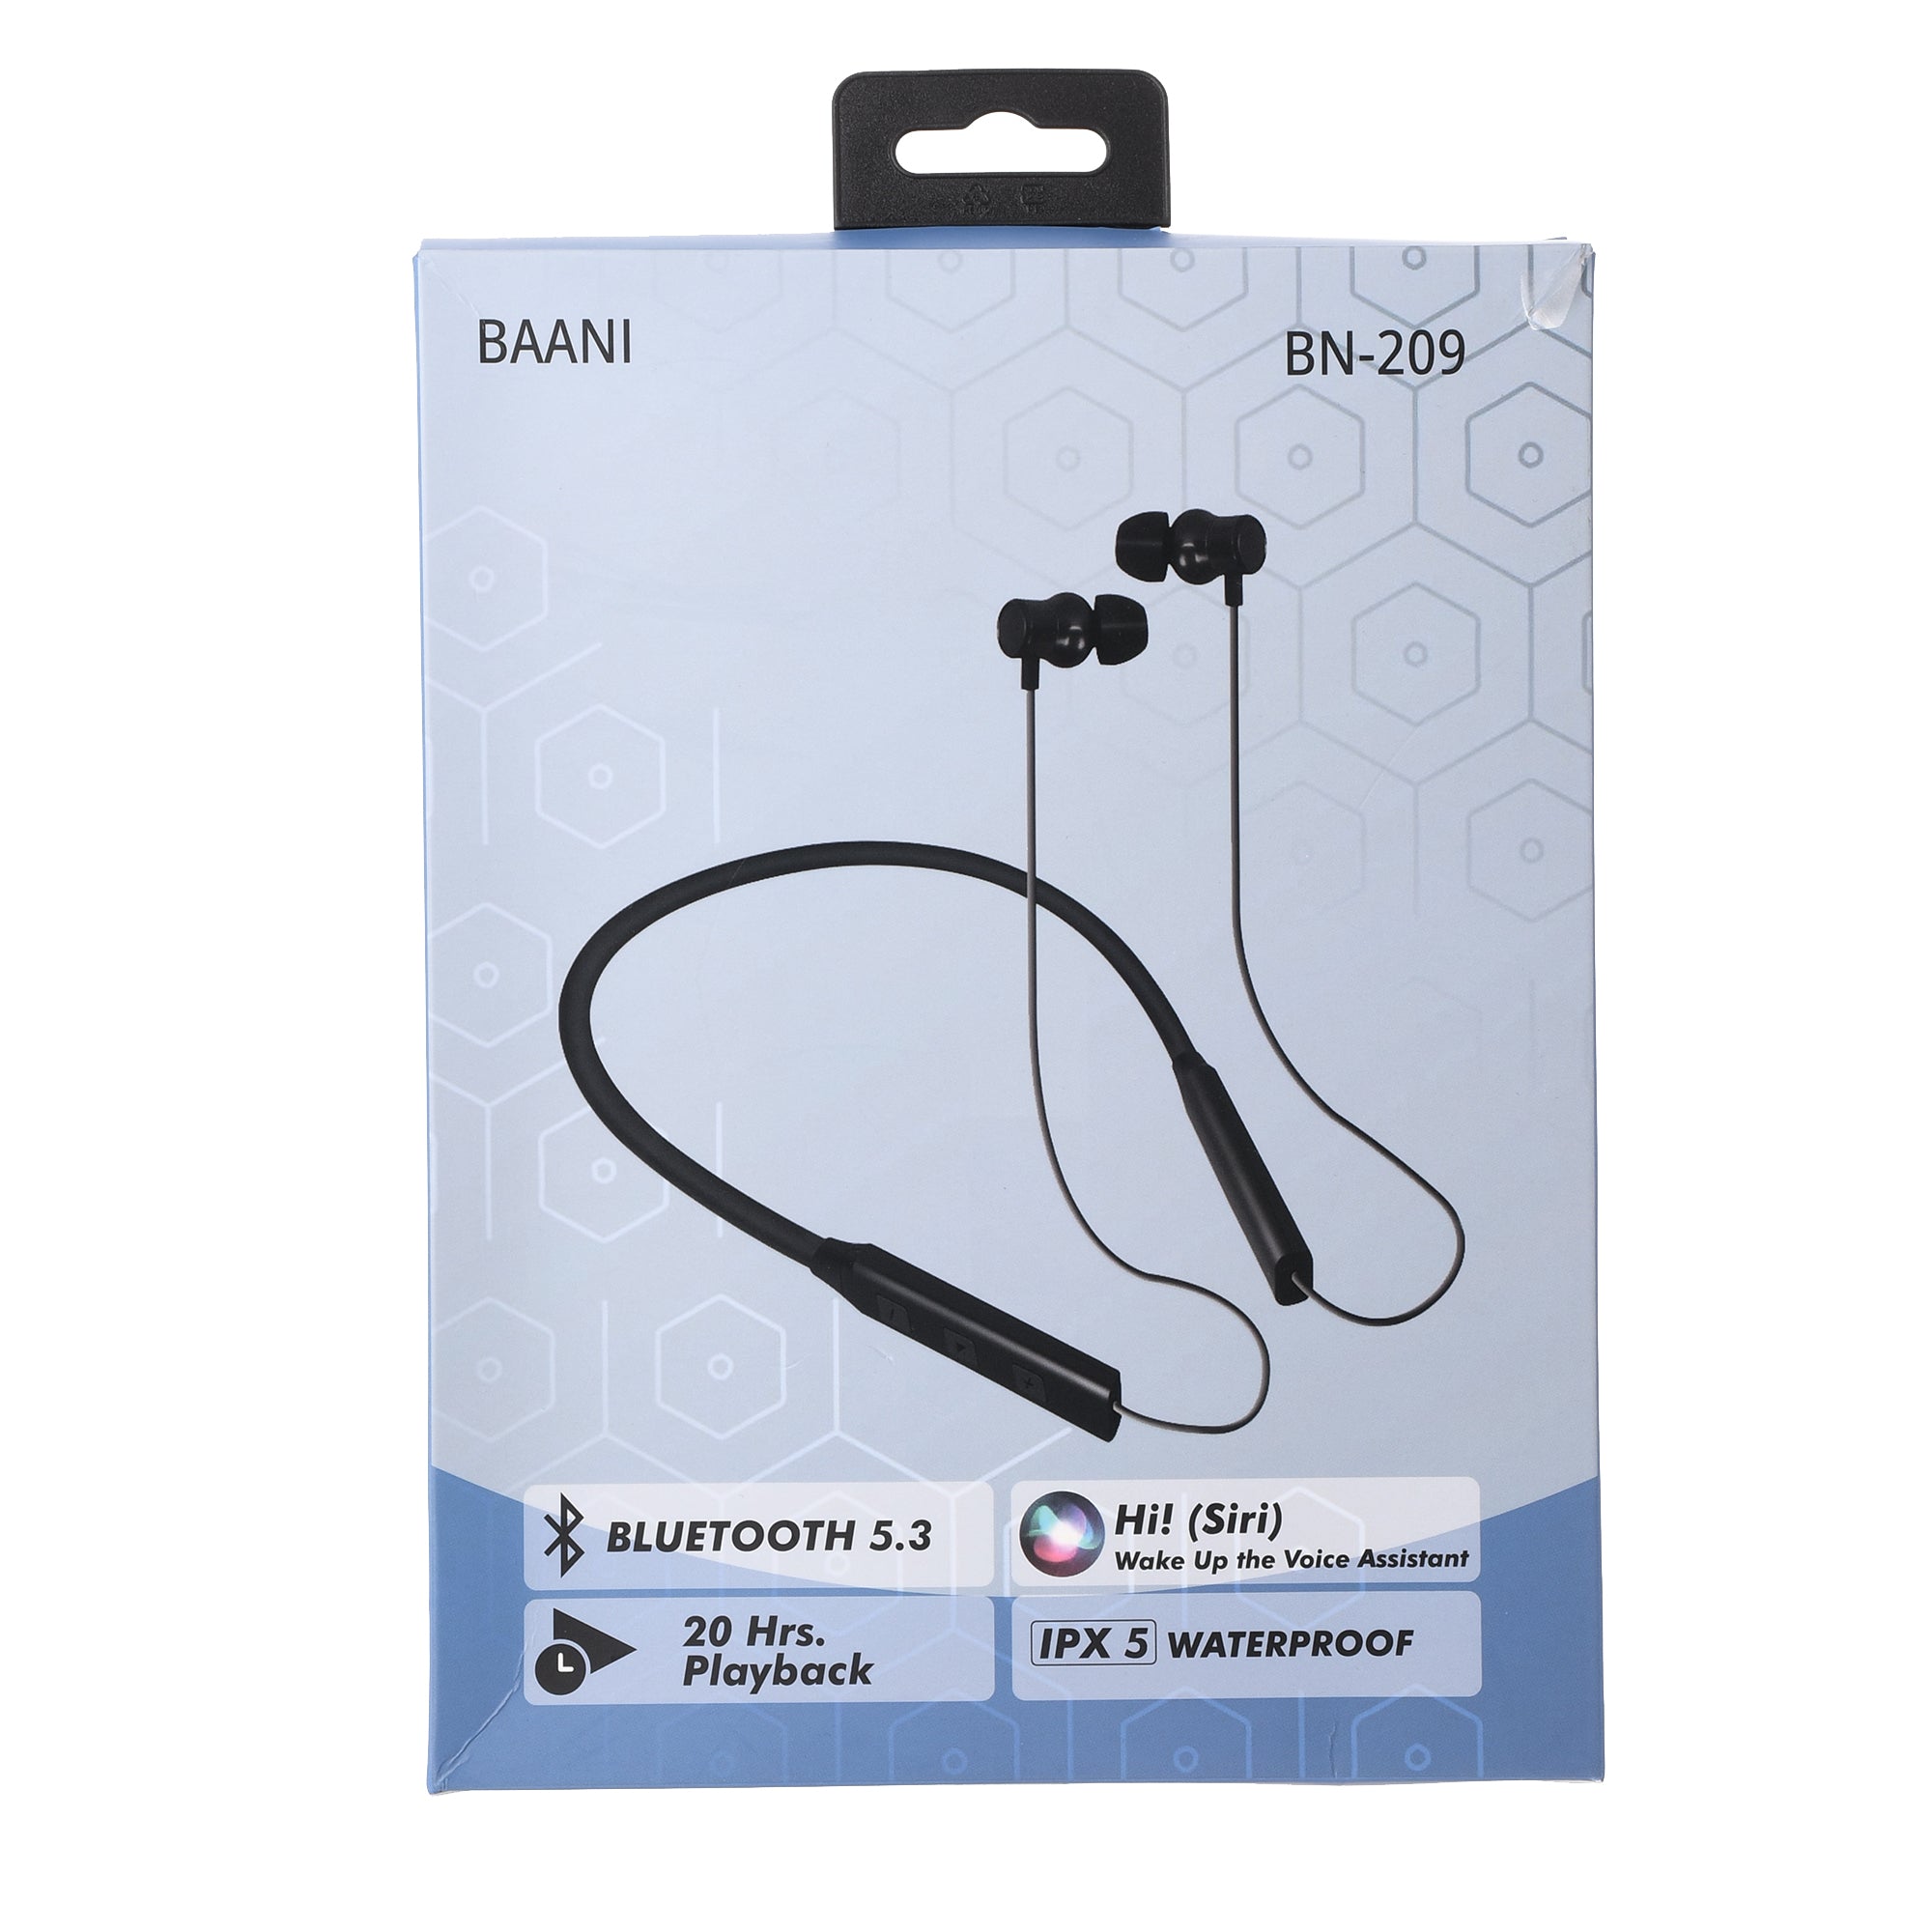 Packaging of Baani BN-209 Neckbands